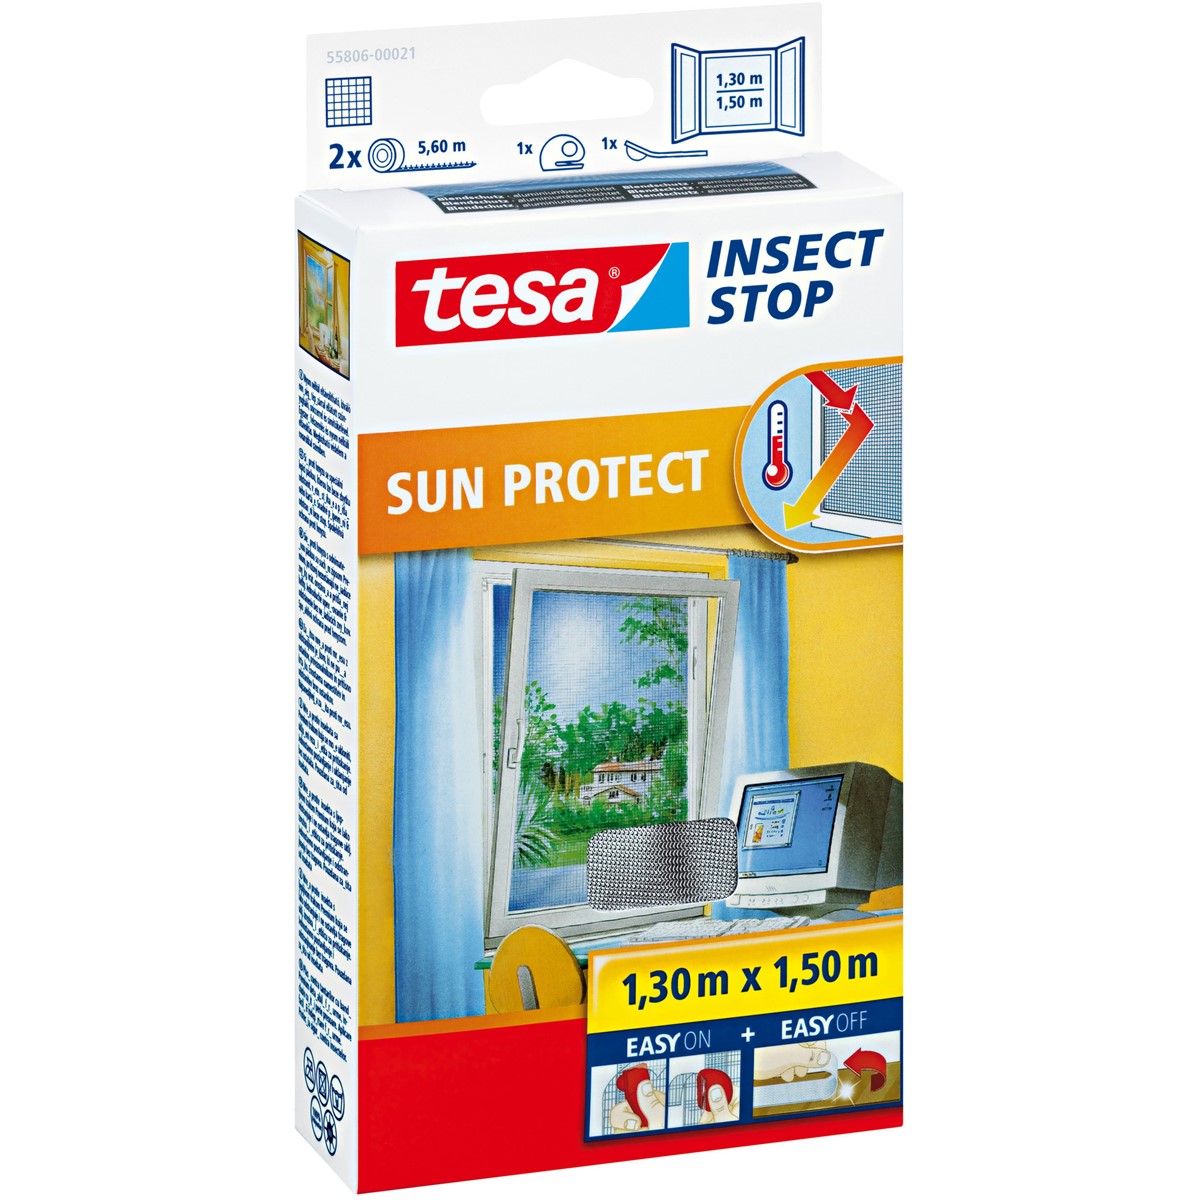 tesa 55806-00021 - Fliegengitter Insect Stop Klett SUN PROTECT für